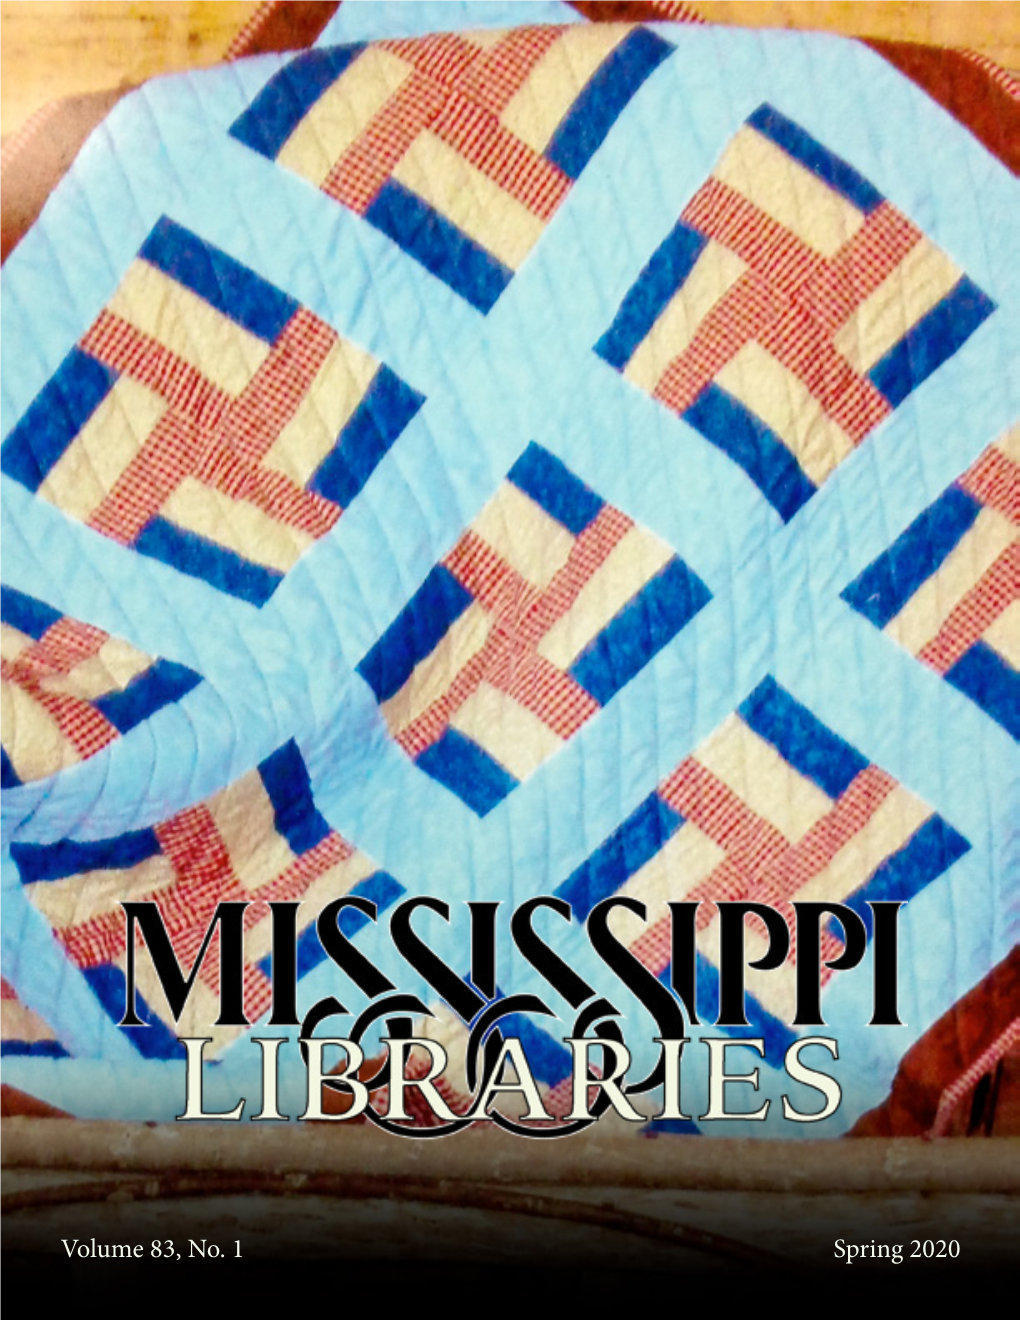 Volume 83, No. 1 Spring 2020 Mississippi Libraries Vol